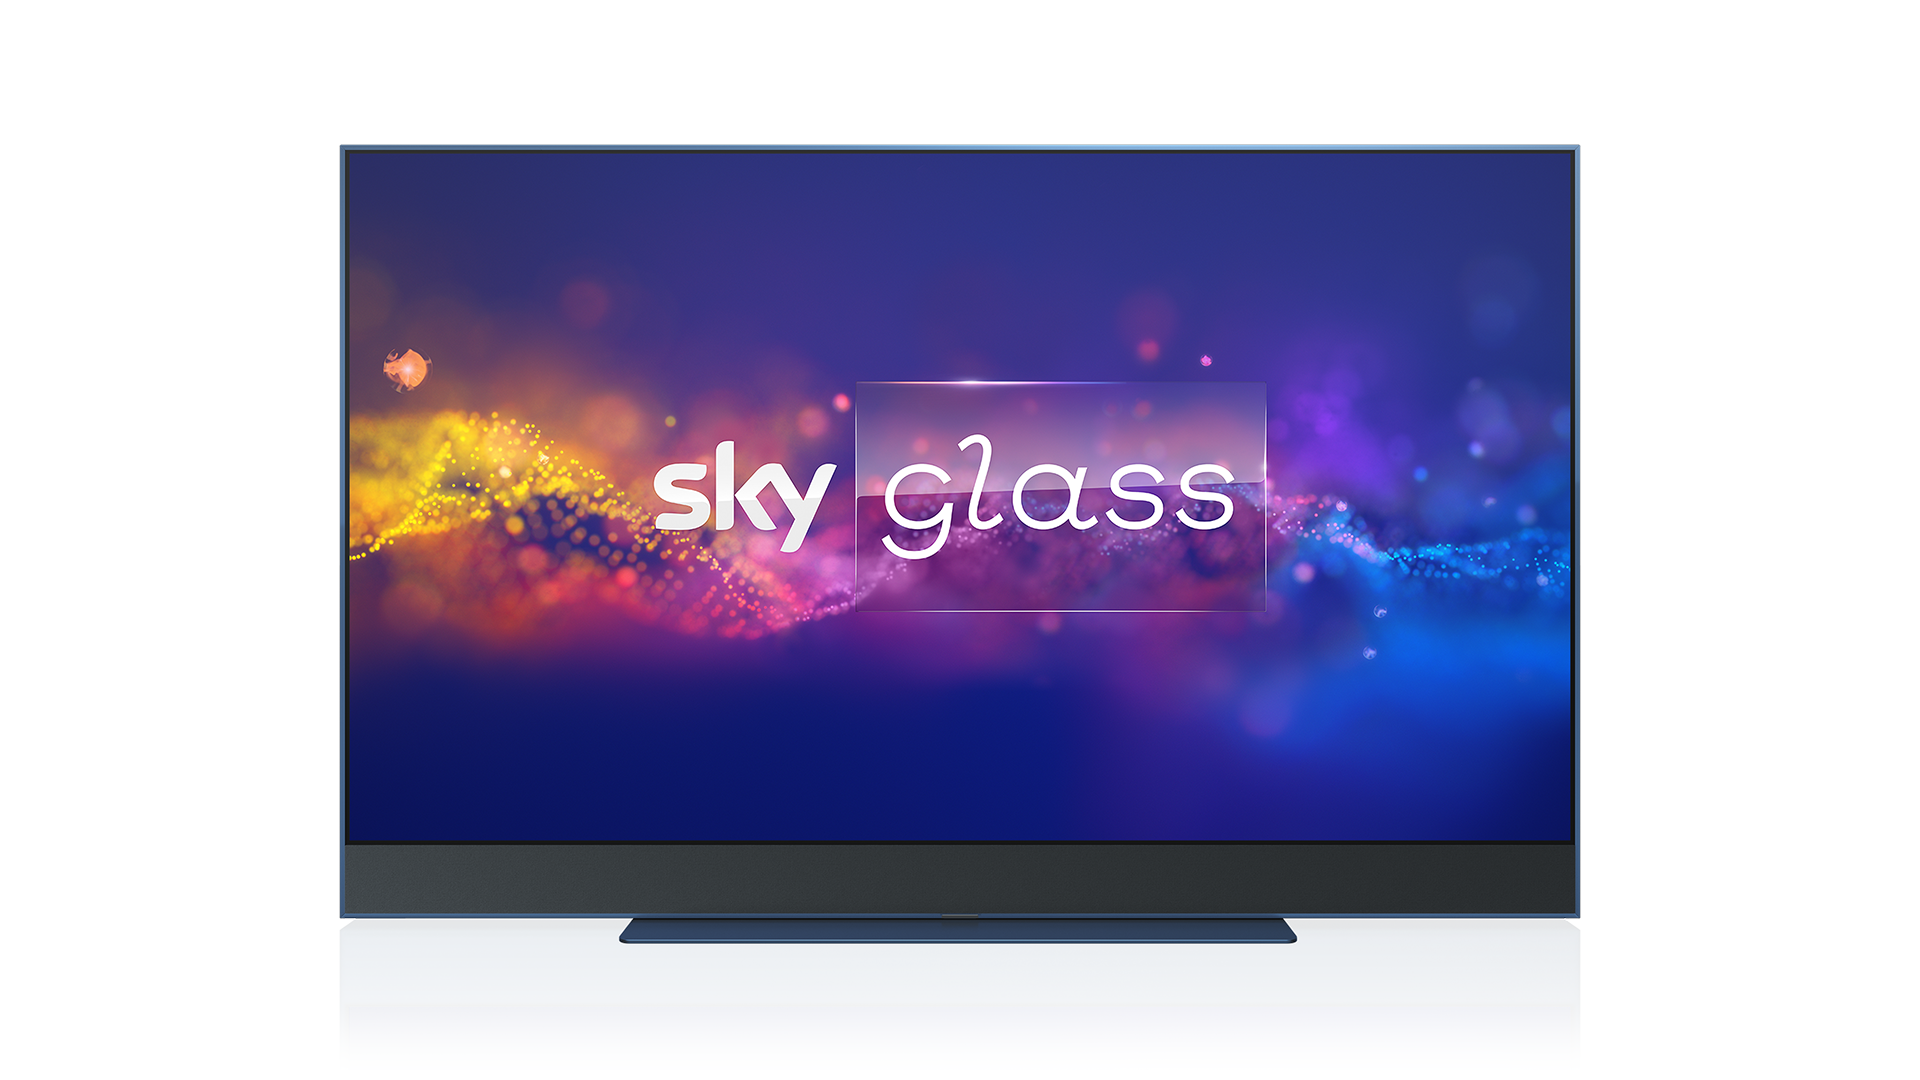 Sky Glass è in offerta flash: anticipo di 25 euro per nuovi e già clienti  Sky